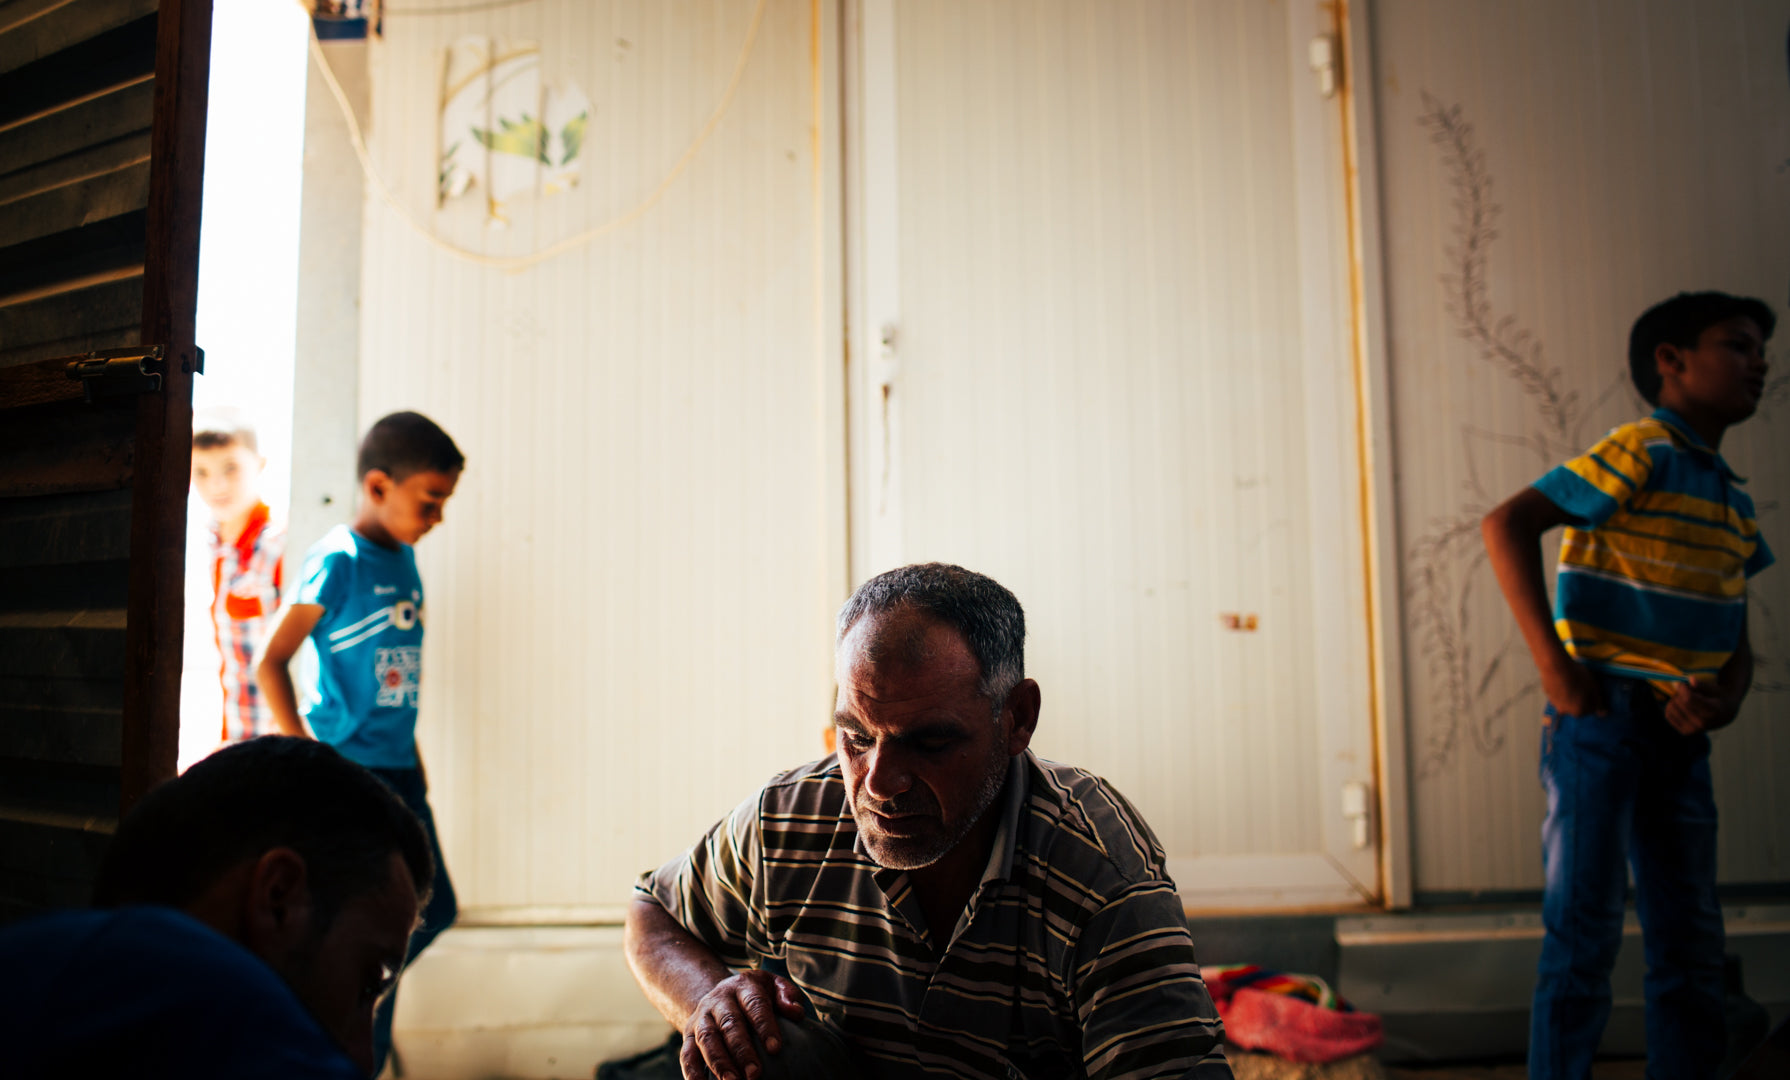 Watan: Portraits of Syrian Refugees in Jordan